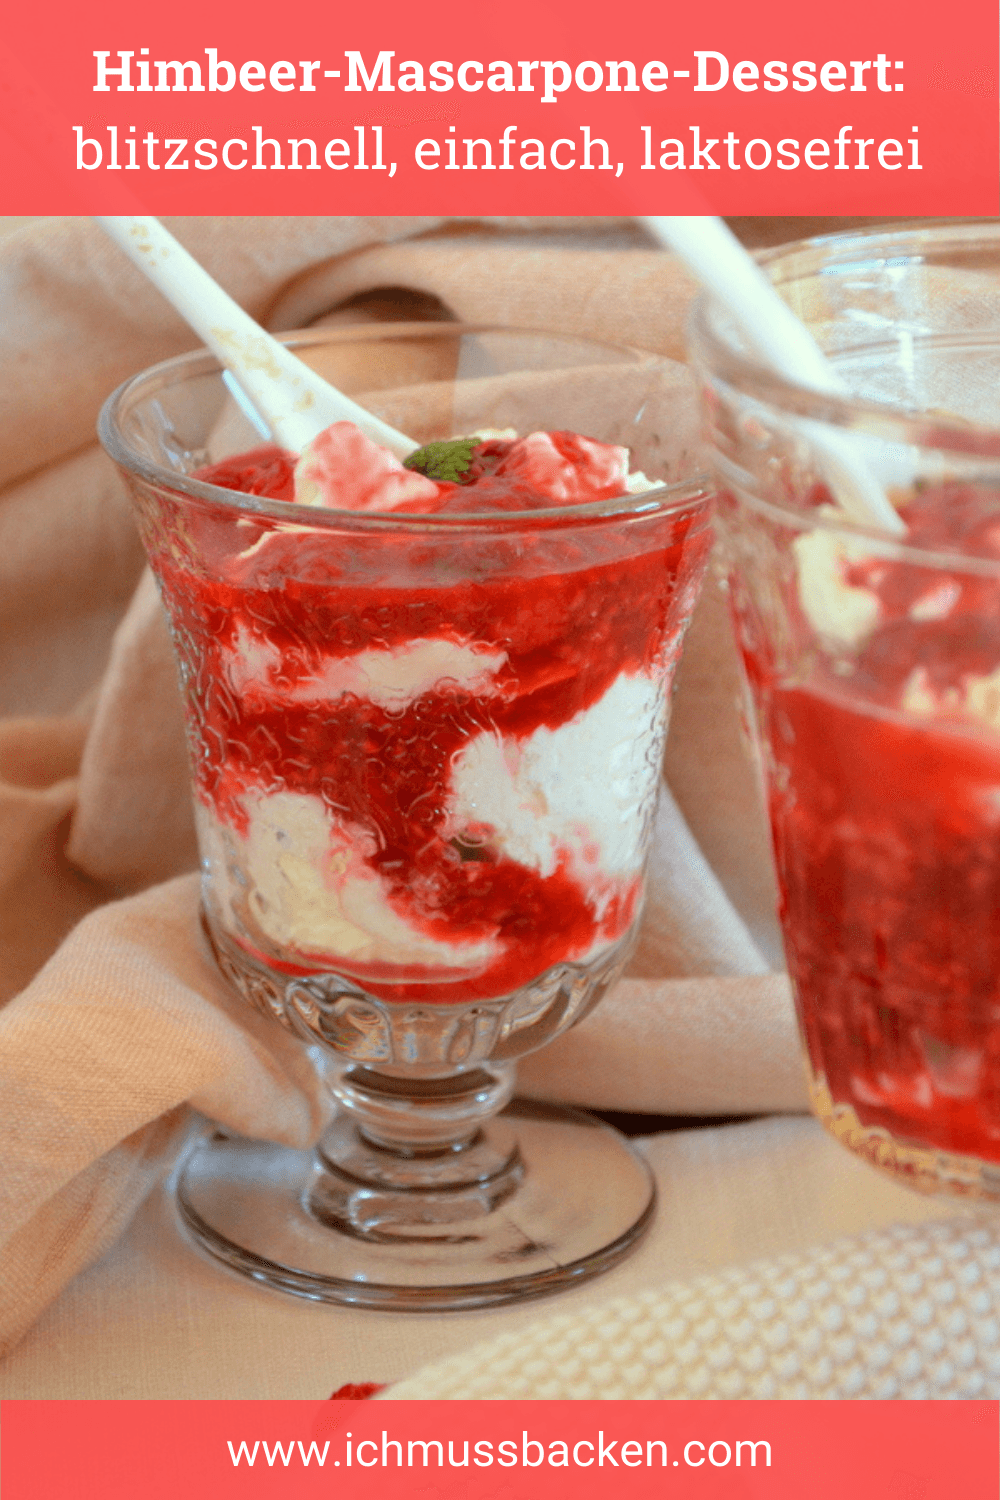 Himbeer-Mascarpone-Dessert  im Glas